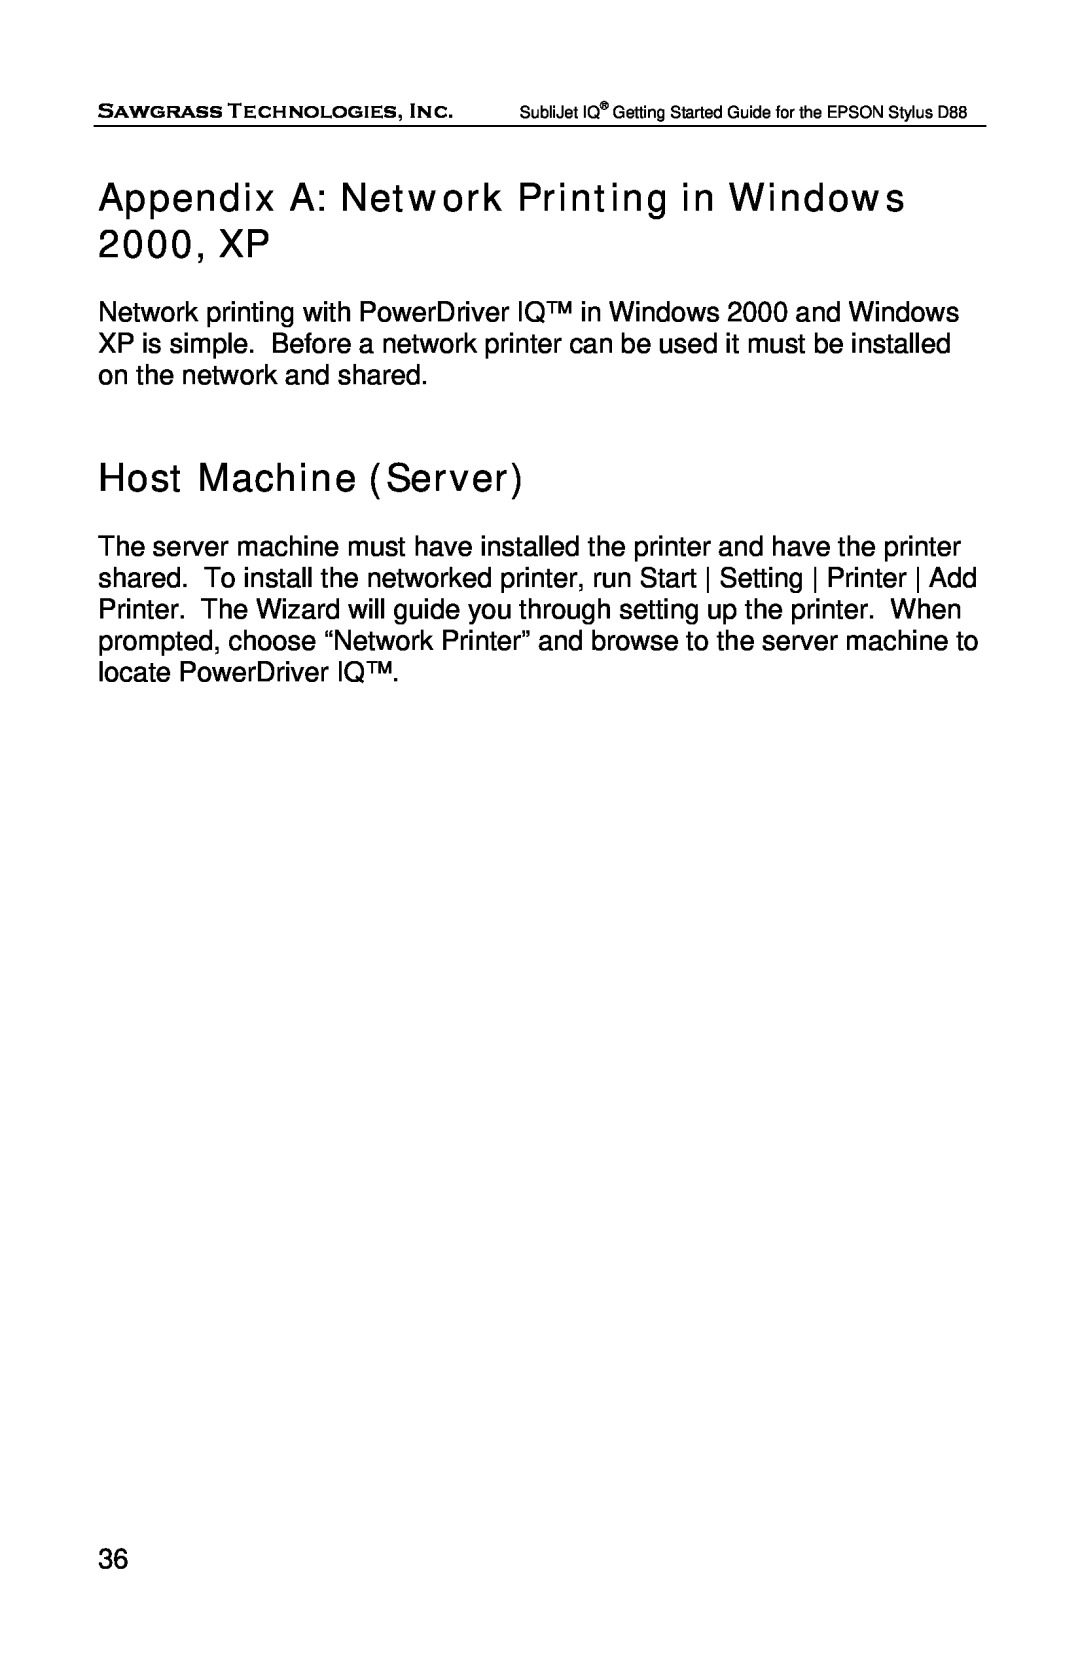 Epson D88 manual Appendix A Network Printing in Windows 2000, XP, Host Machine Server 